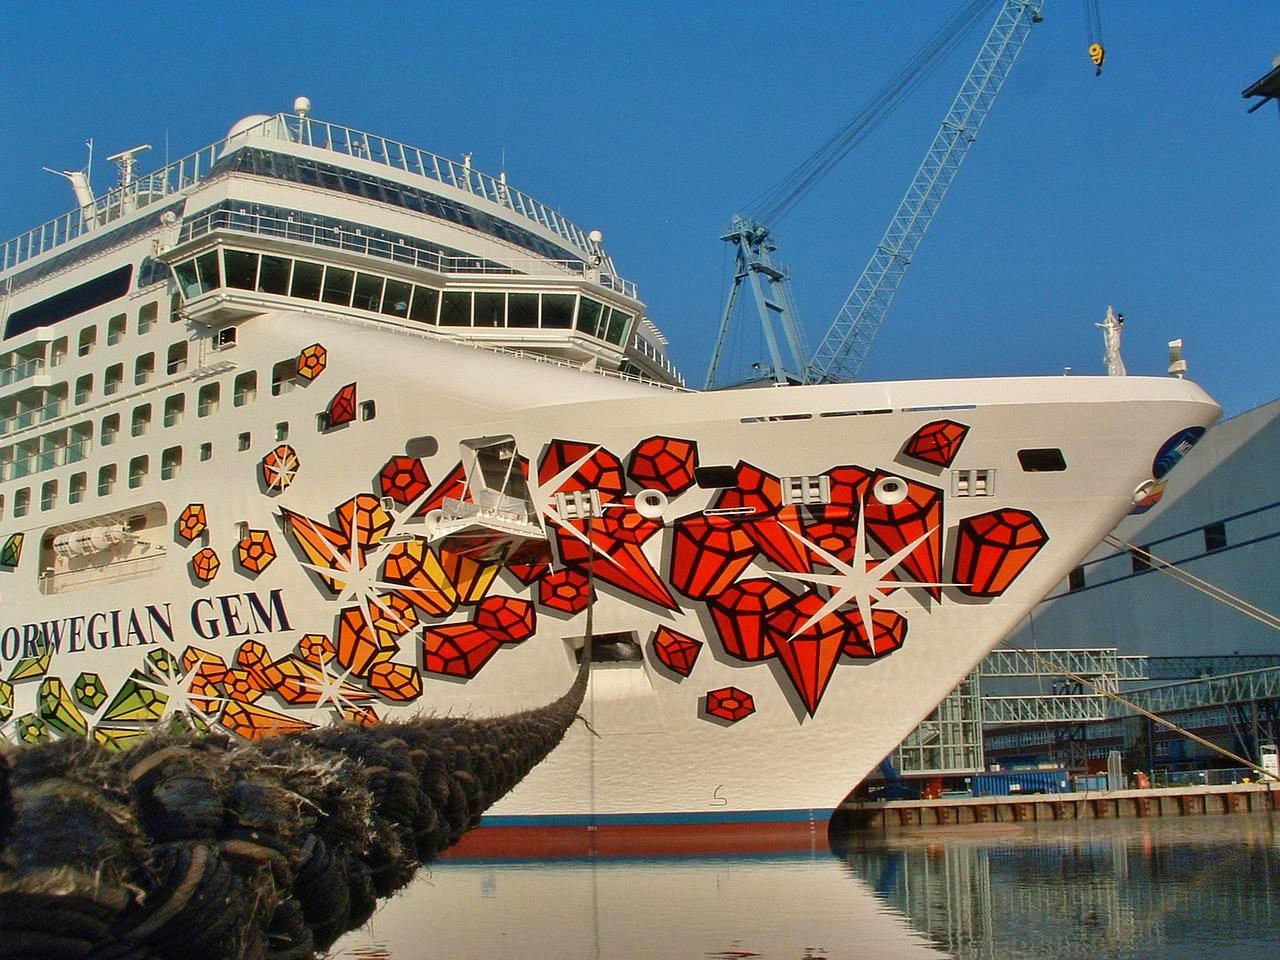 Norwegian Gem got around cruise ship ban in Venice